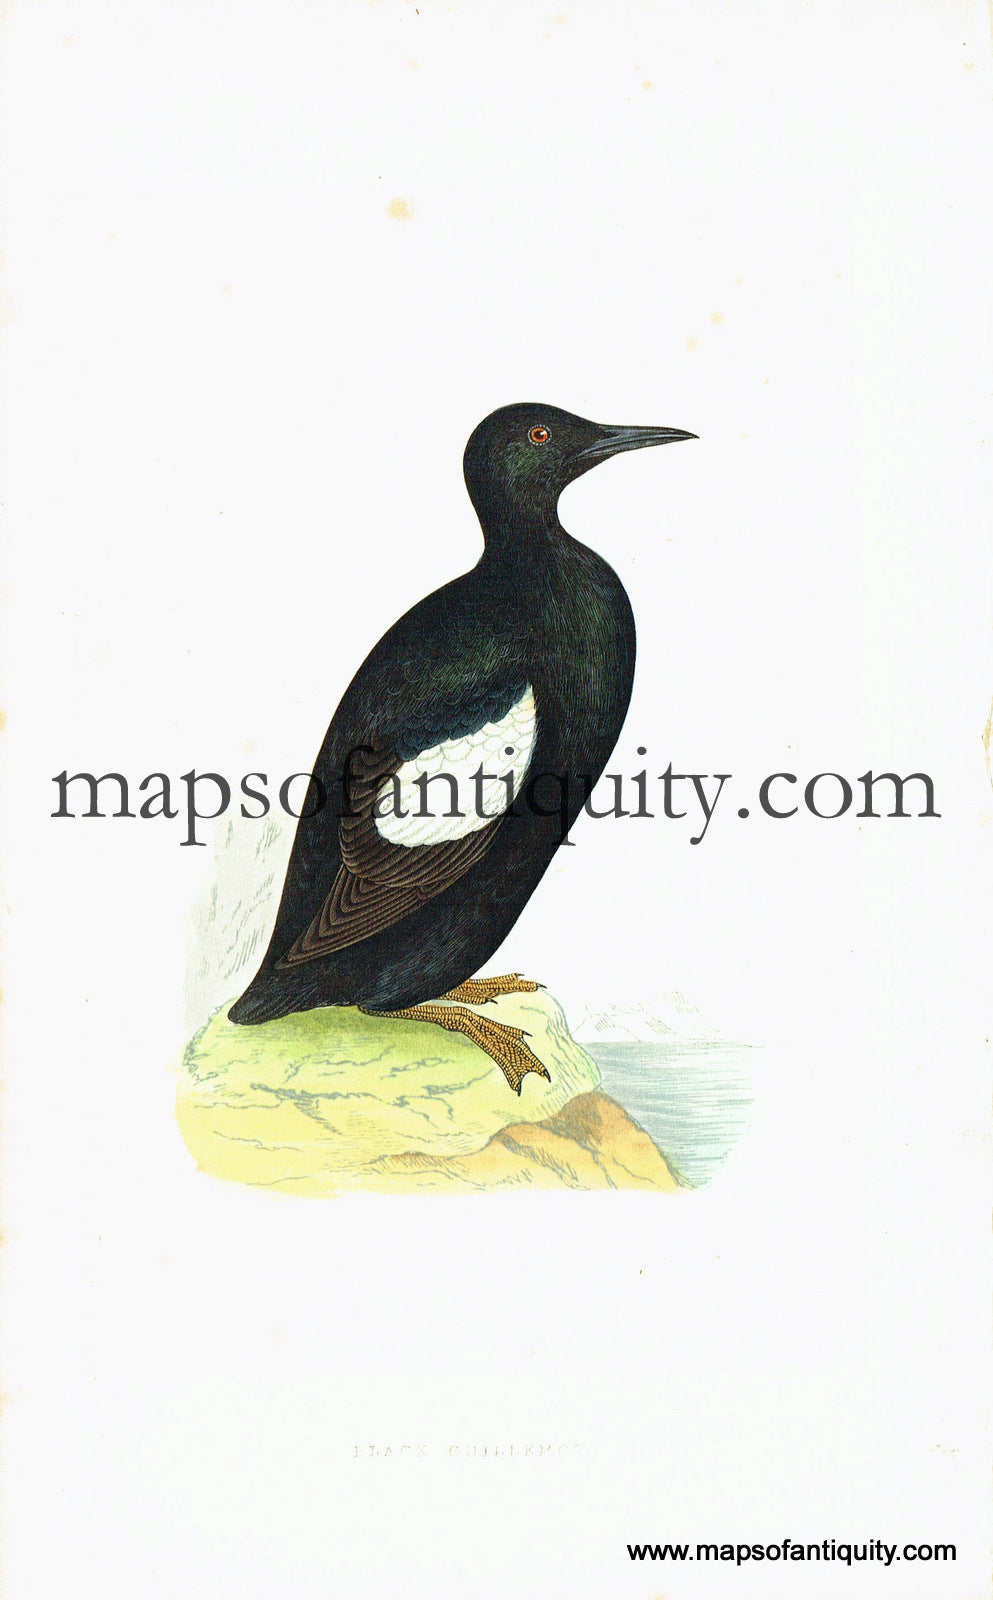 Antique-Hand-Colored-Engraved-Illustration-Black-Guillemot-Antique-Prints-Natural-History-Birds-c.-1860-Morris-Maps-Of-Antiquity